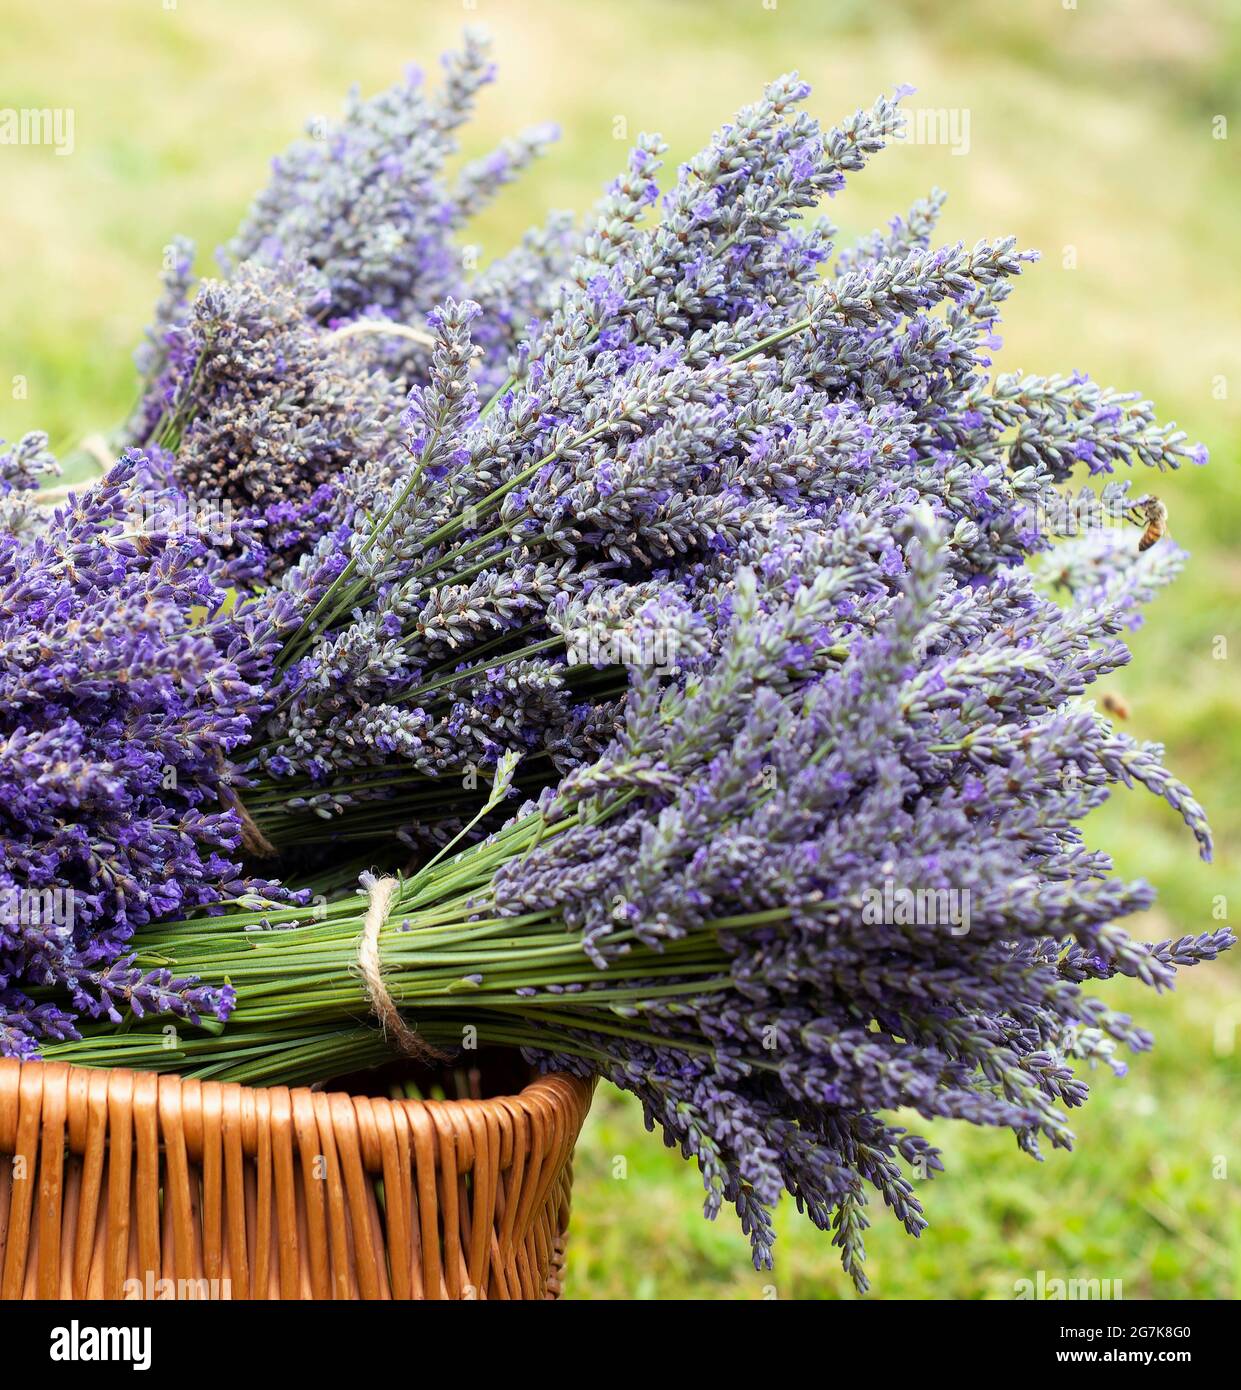 A basket of freshly cut lavender. Stock Photo